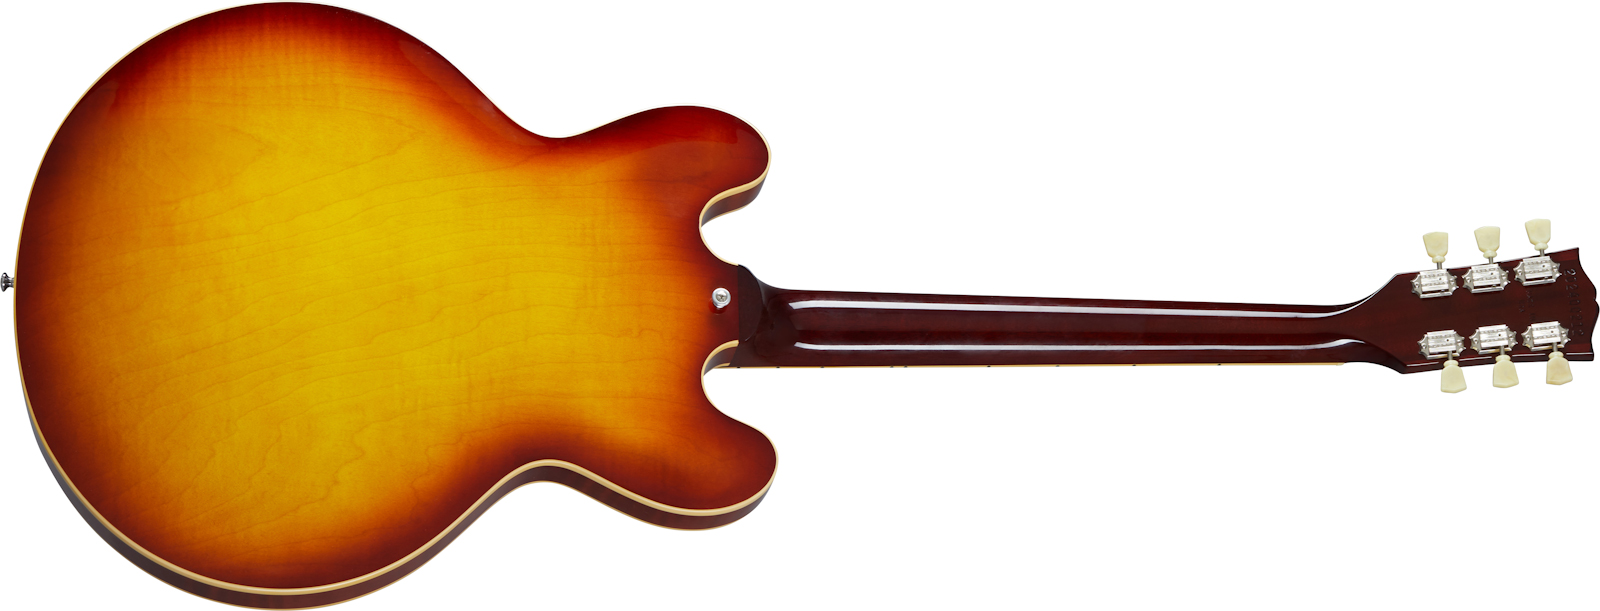 Gibson Es-335 Figured Original 2020 2h Ht Rw - Iced Tea - Semi hollow elektriche gitaar - Variation 1